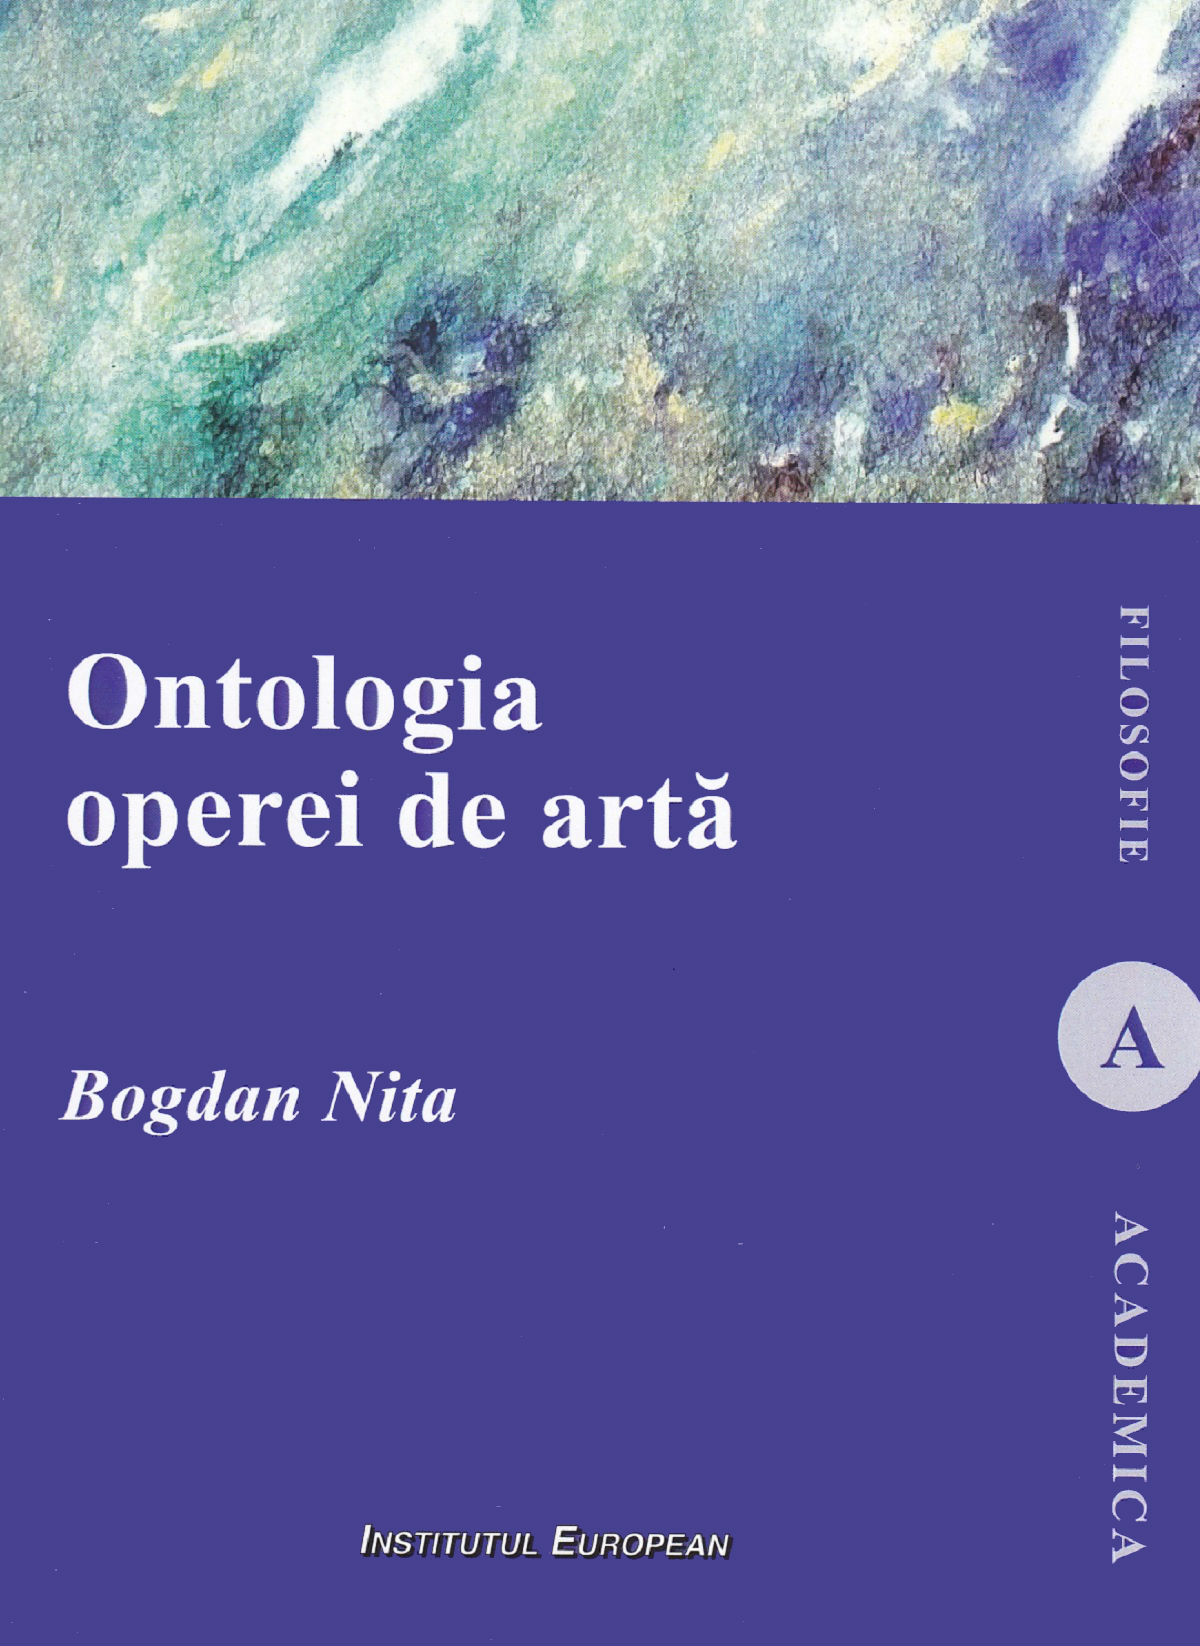 Ontologia operei de arta - Bogdan Nita